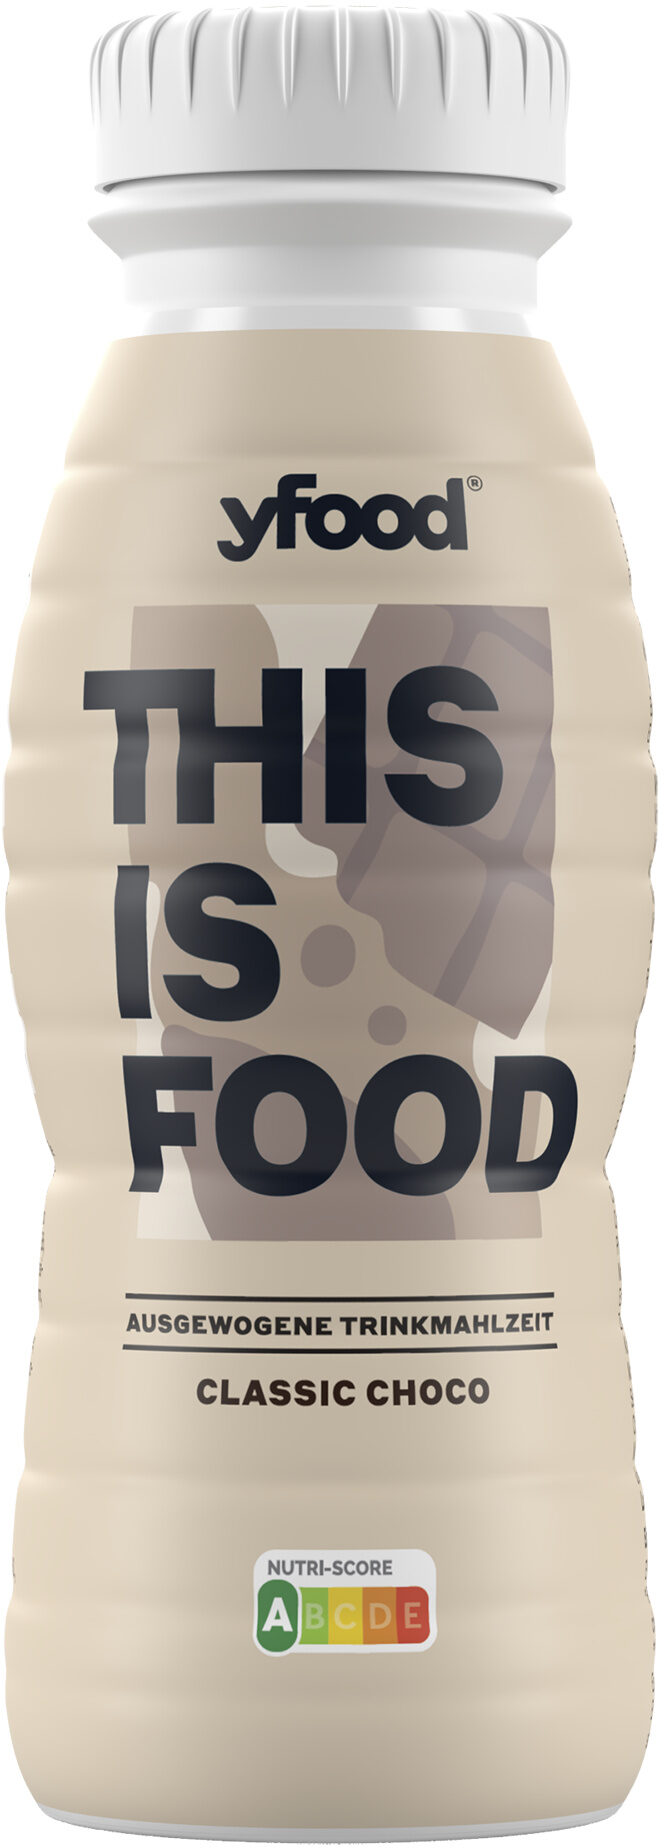 This is food chocolate - Instruction de recyclage et/ou informations d'emballage - de